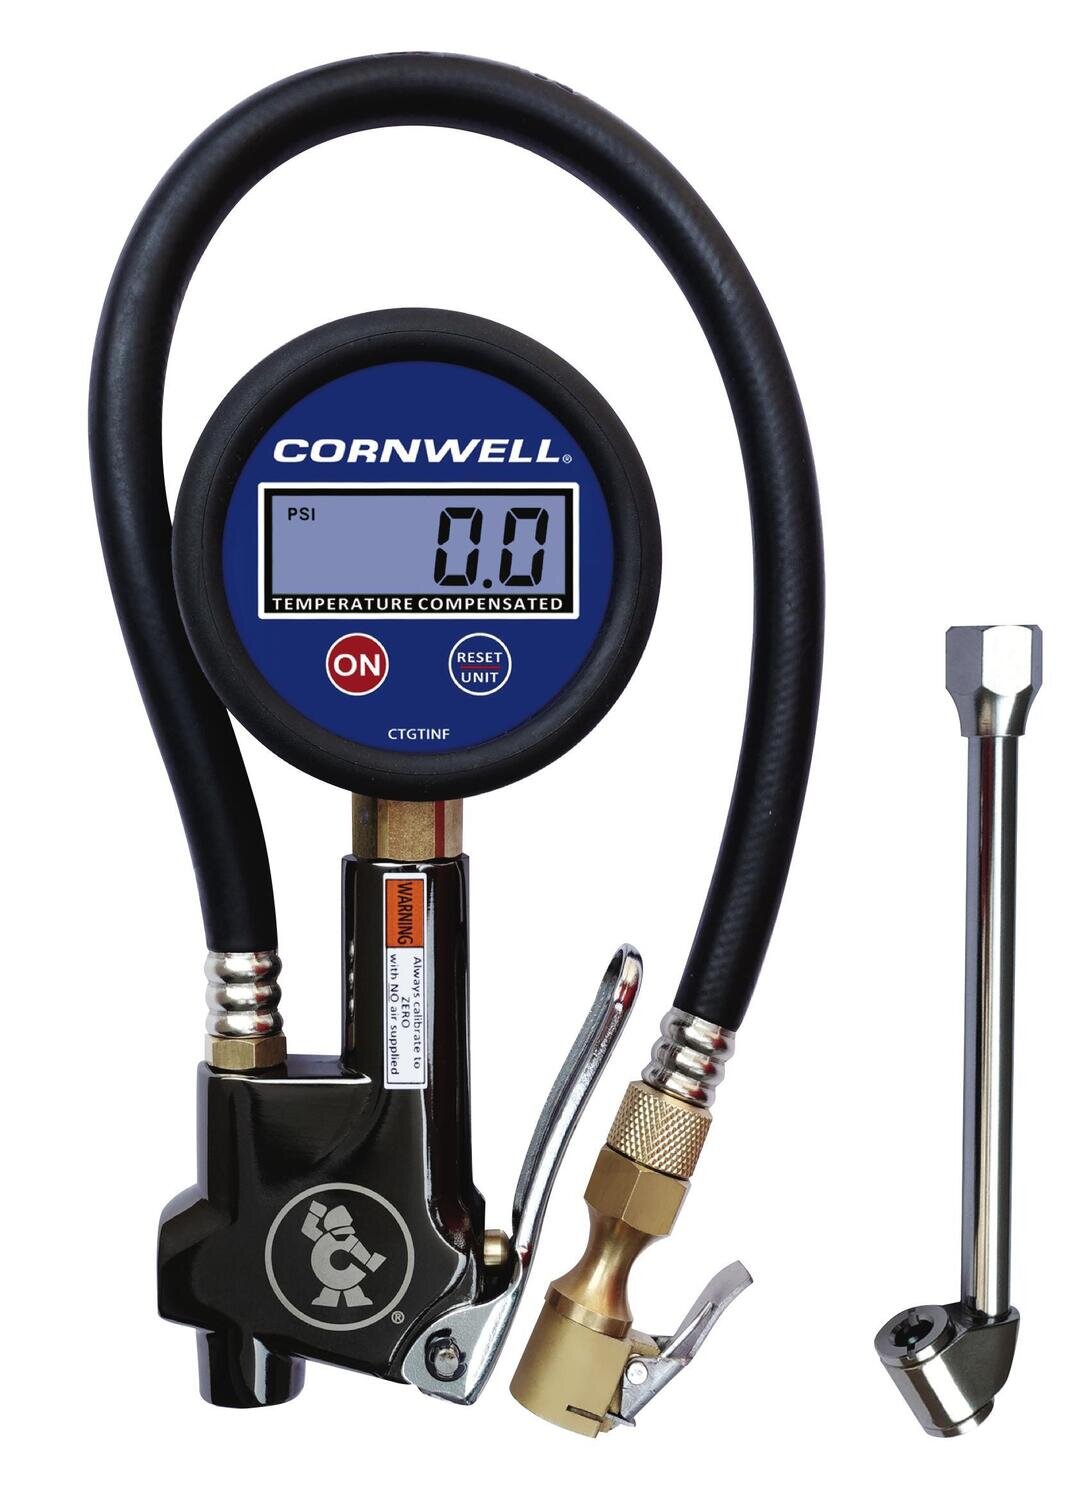 CTGTINF - Cornwell® Digital Tire Inflator